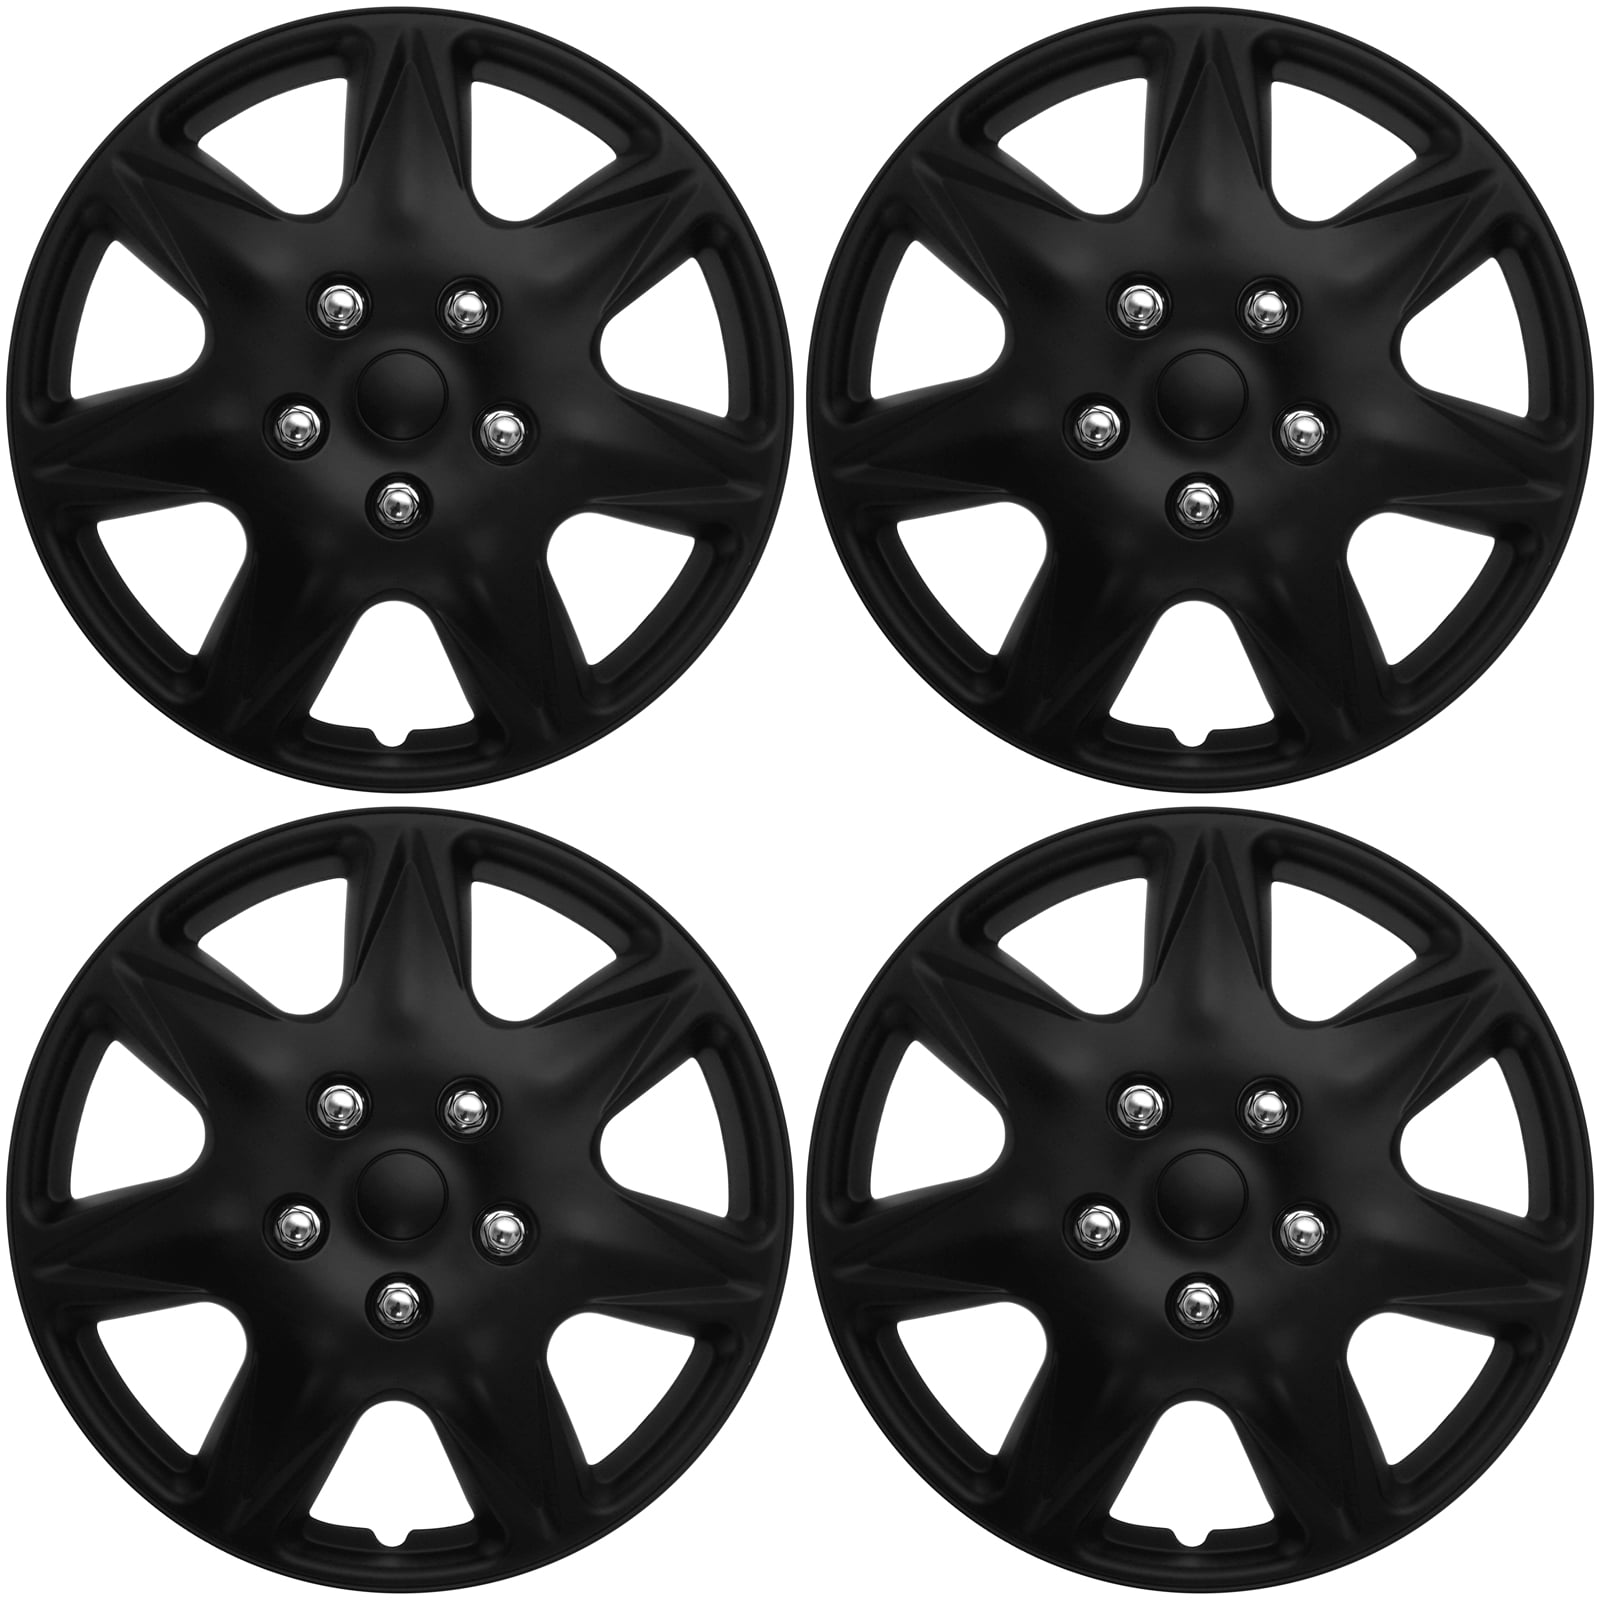 15 inch Wheel Trim Covers Set of 4 pcs ENFINITIY  Caps